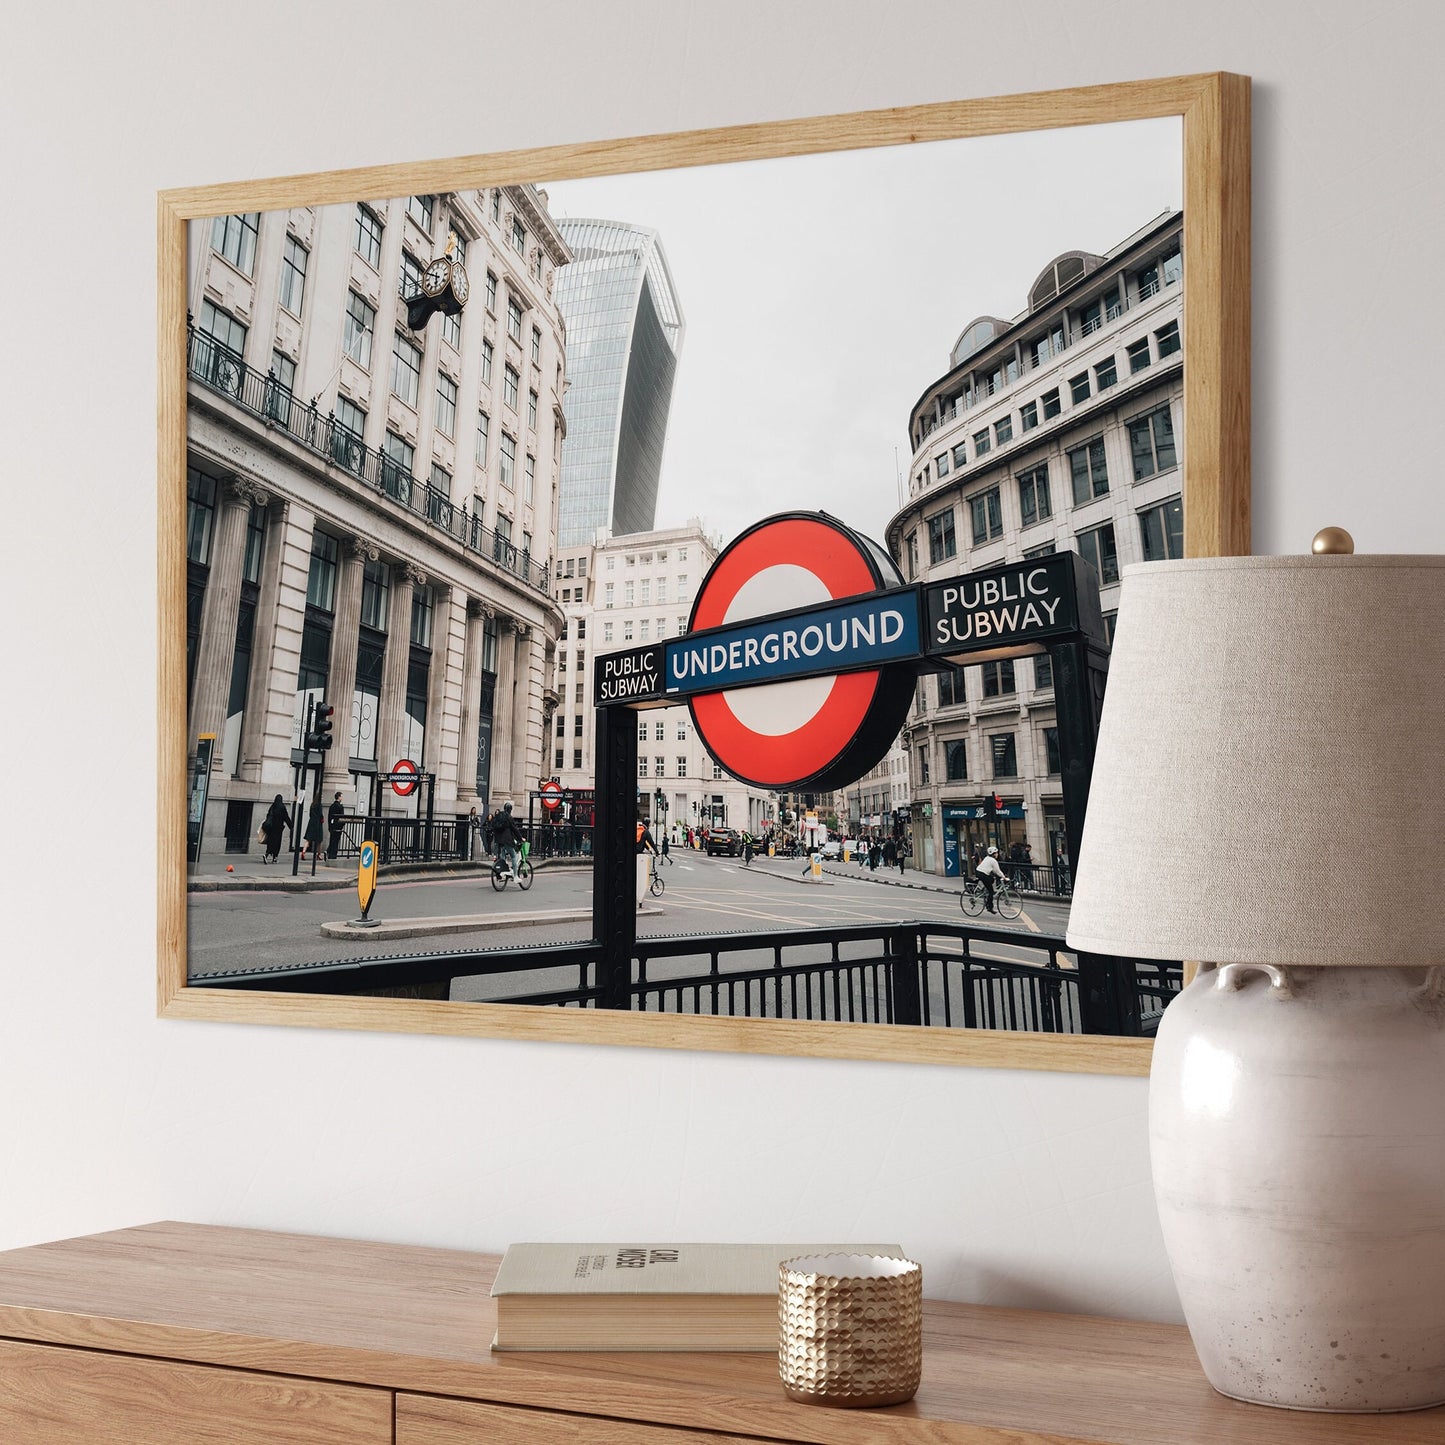 London Tube Sign, Streets of London Photography, England Print, Europe City Print, London Wall Art, London Underground Poster, UK Travel Art